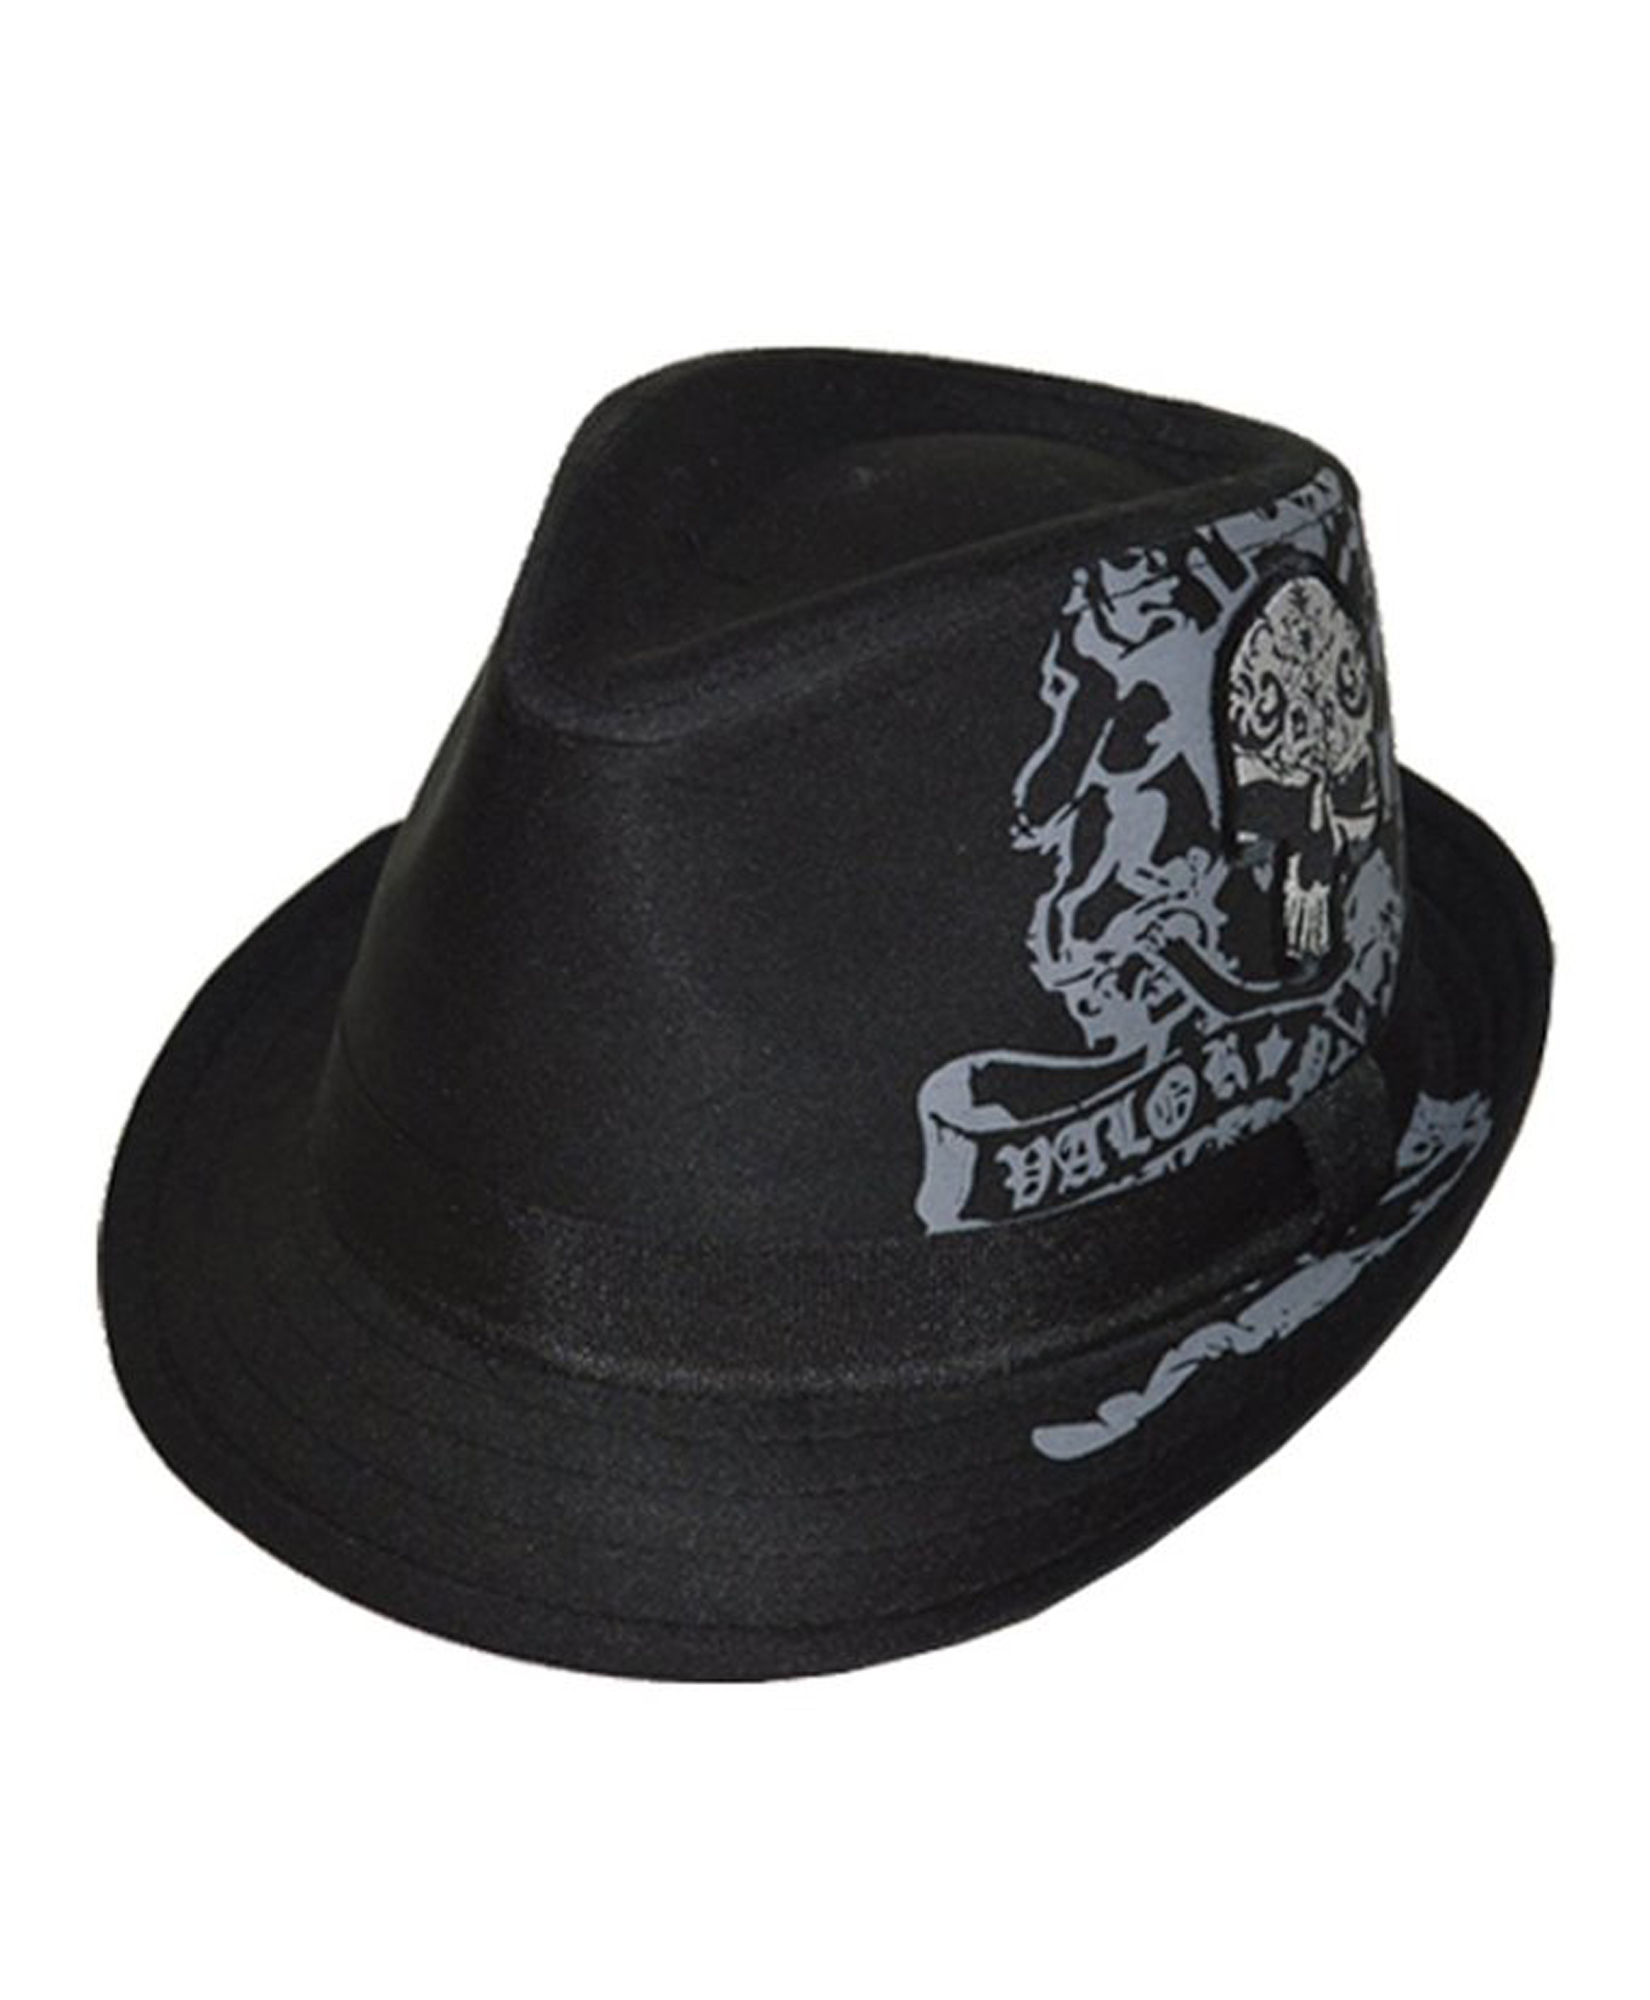 Black Fedora Hat with Skull Print